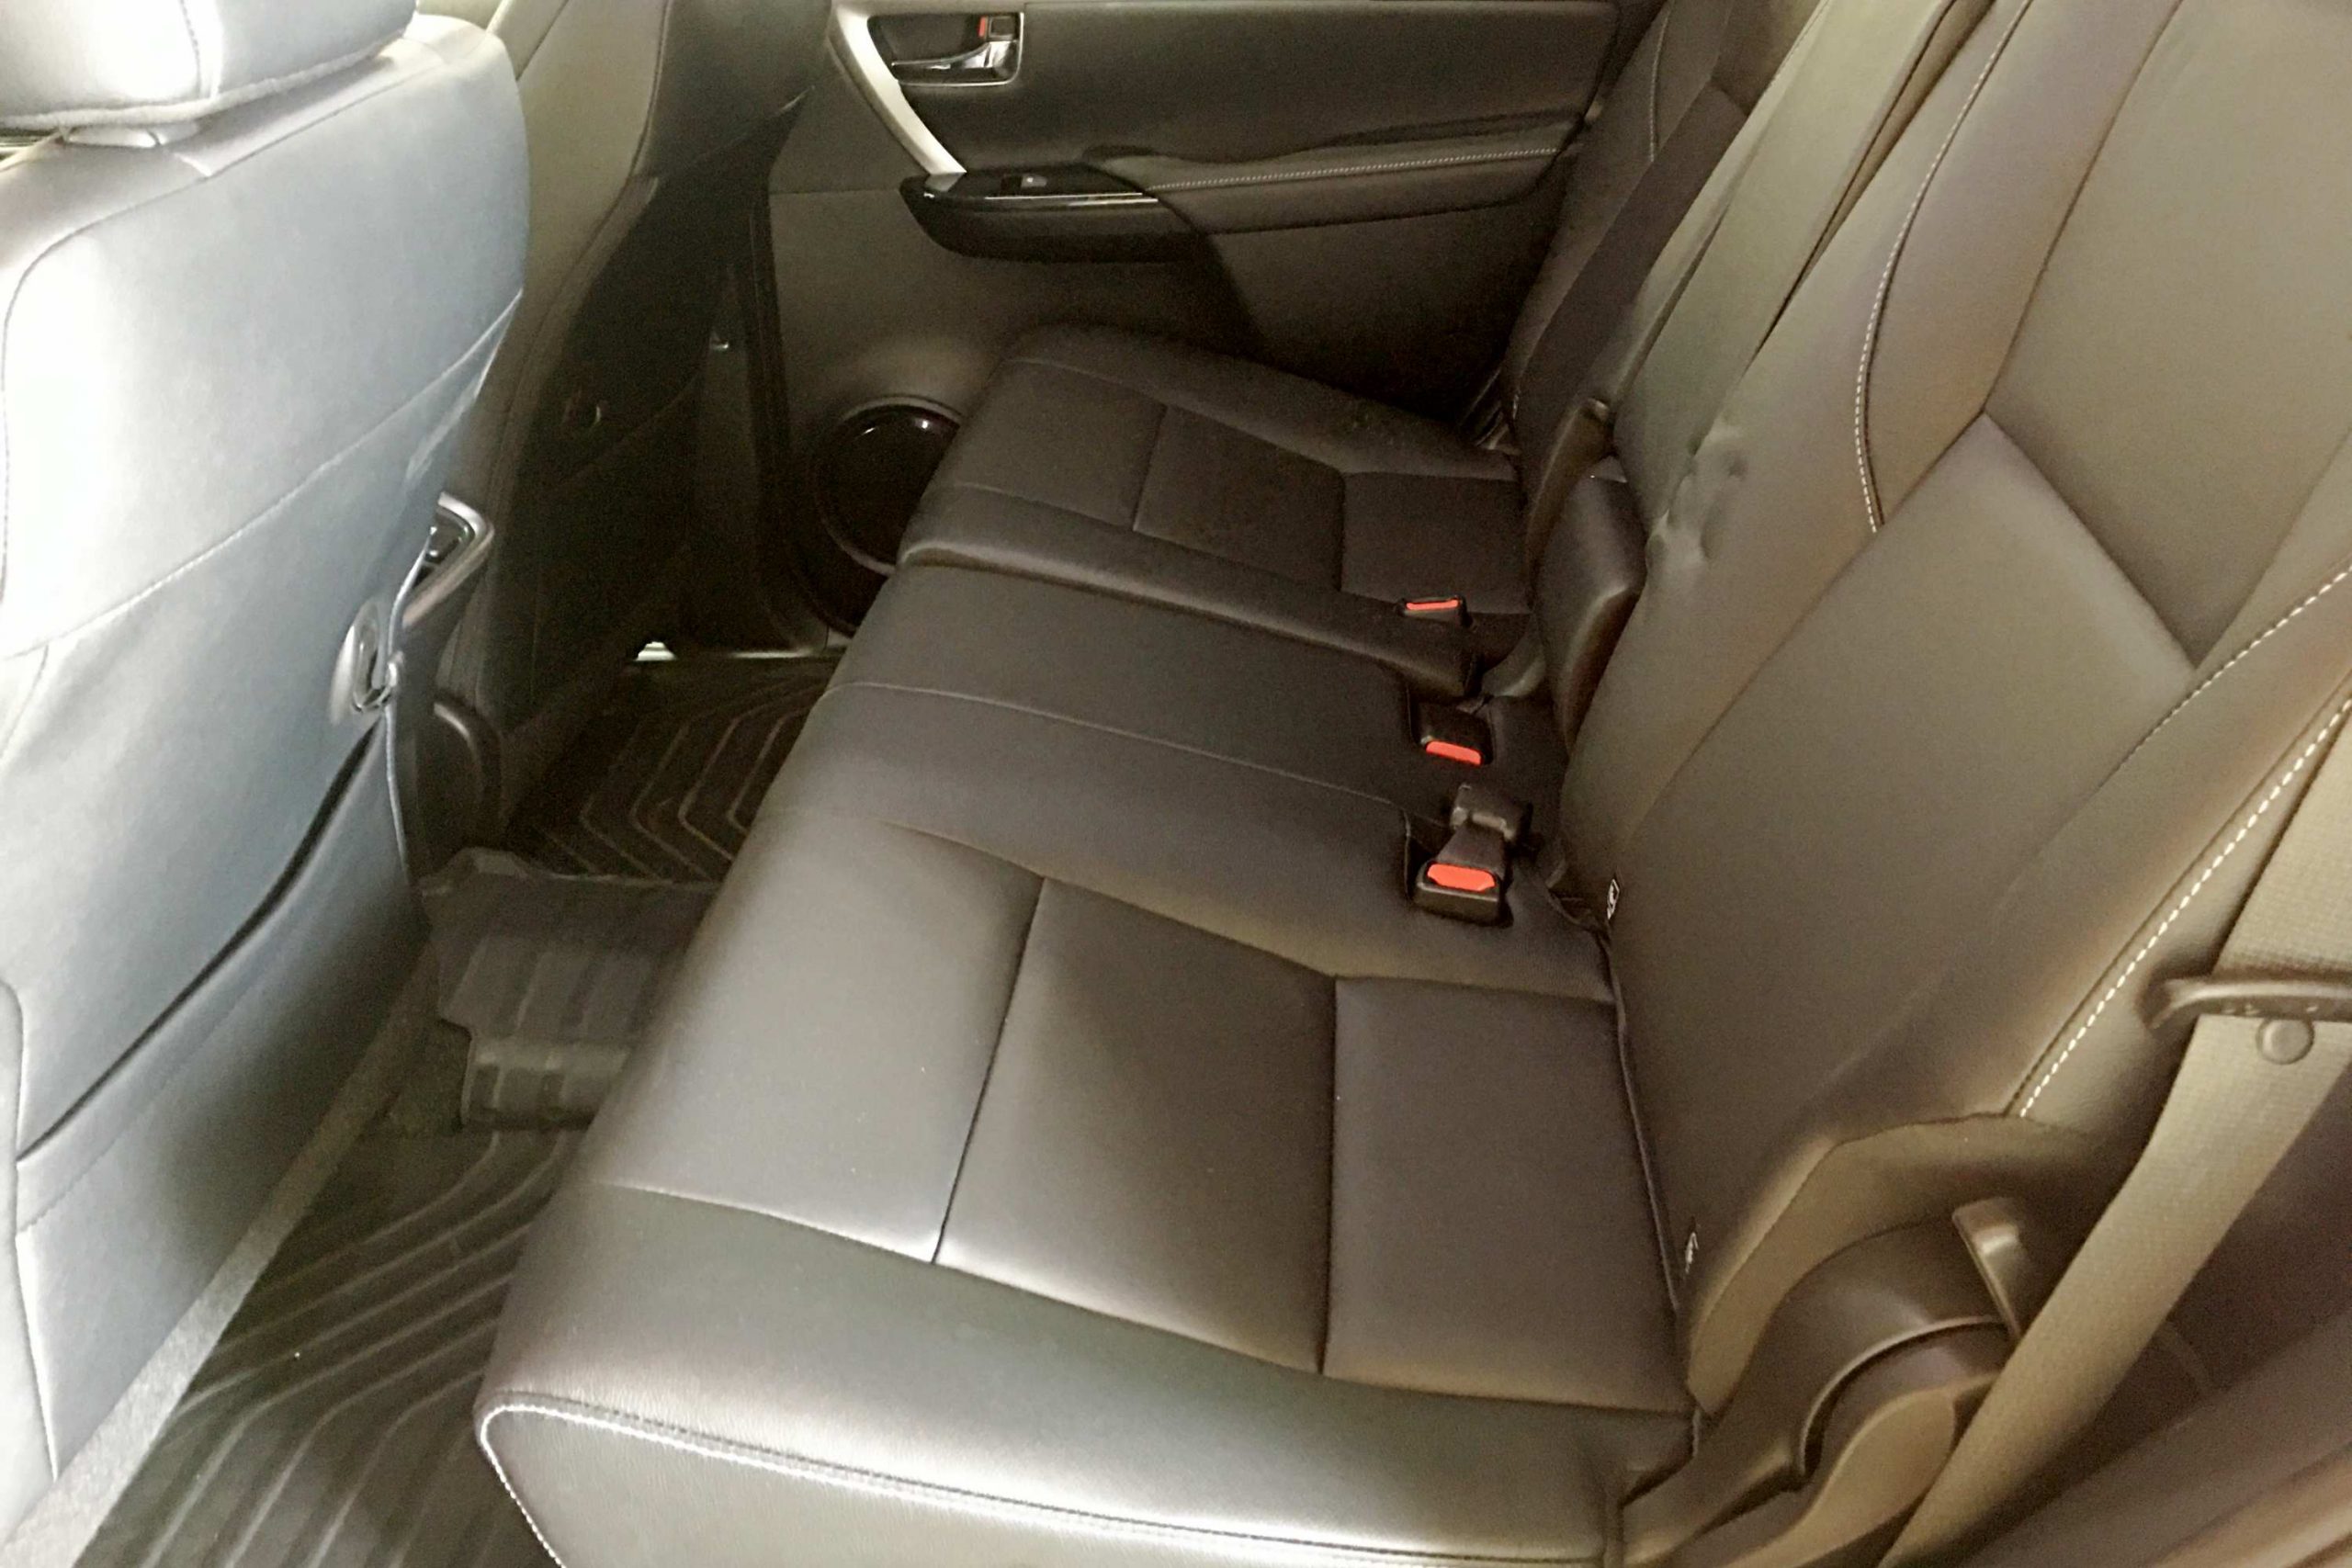 Toyota Fortuner Crusade 2021 rear seats